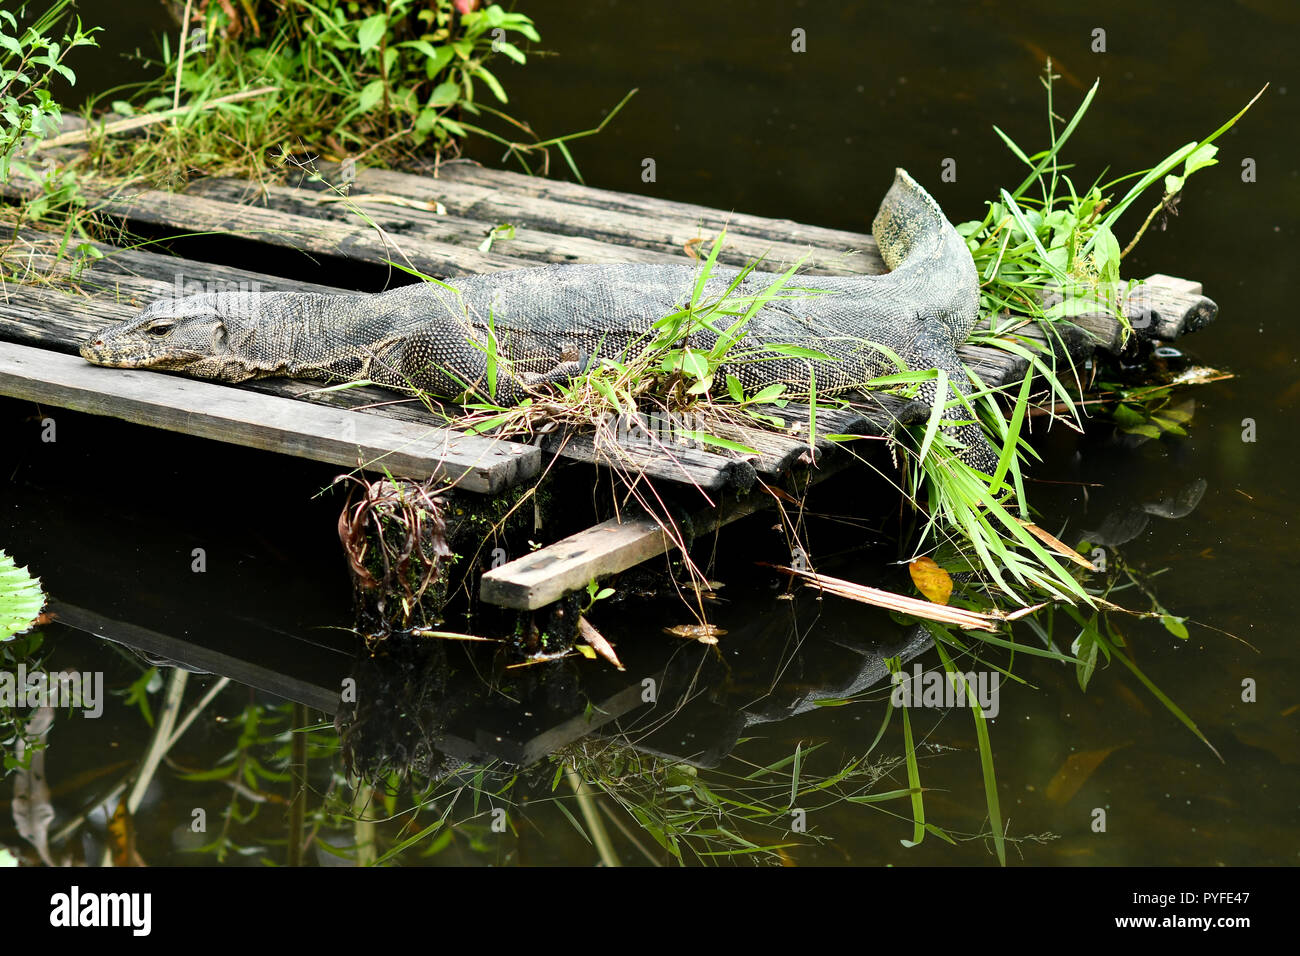 Malayan monitor lizard resting on wooden platform Stock Photo